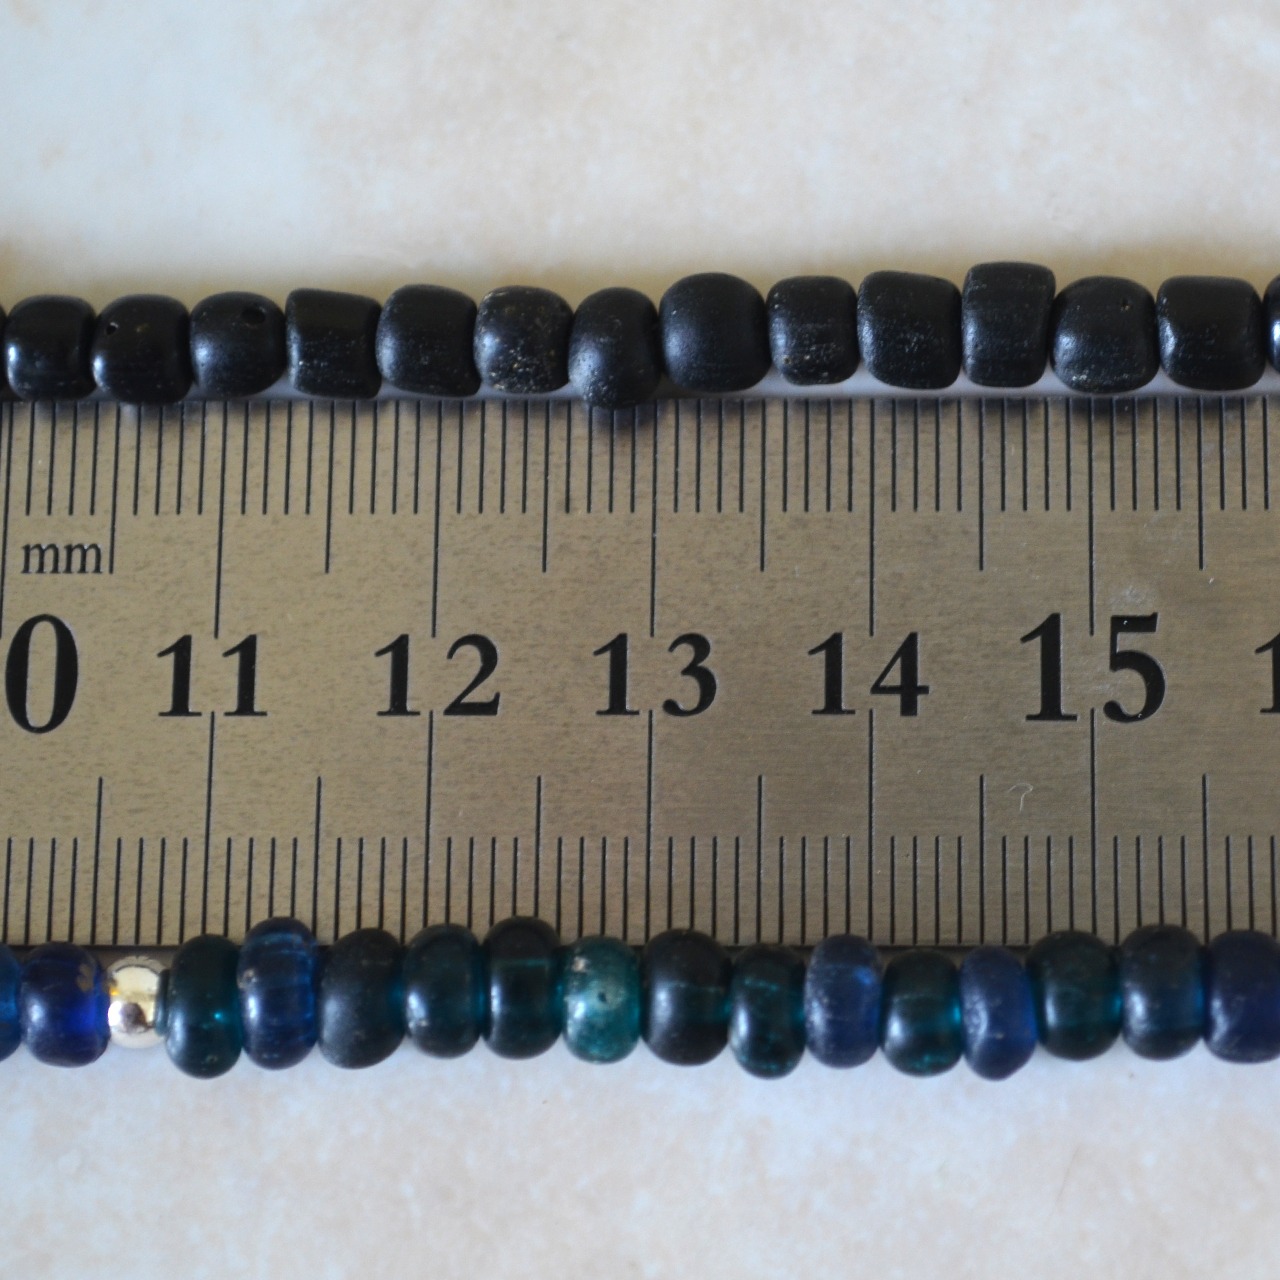 Mandi/マンディ Antique Beads Necklace(60cm)(Navy/Black)